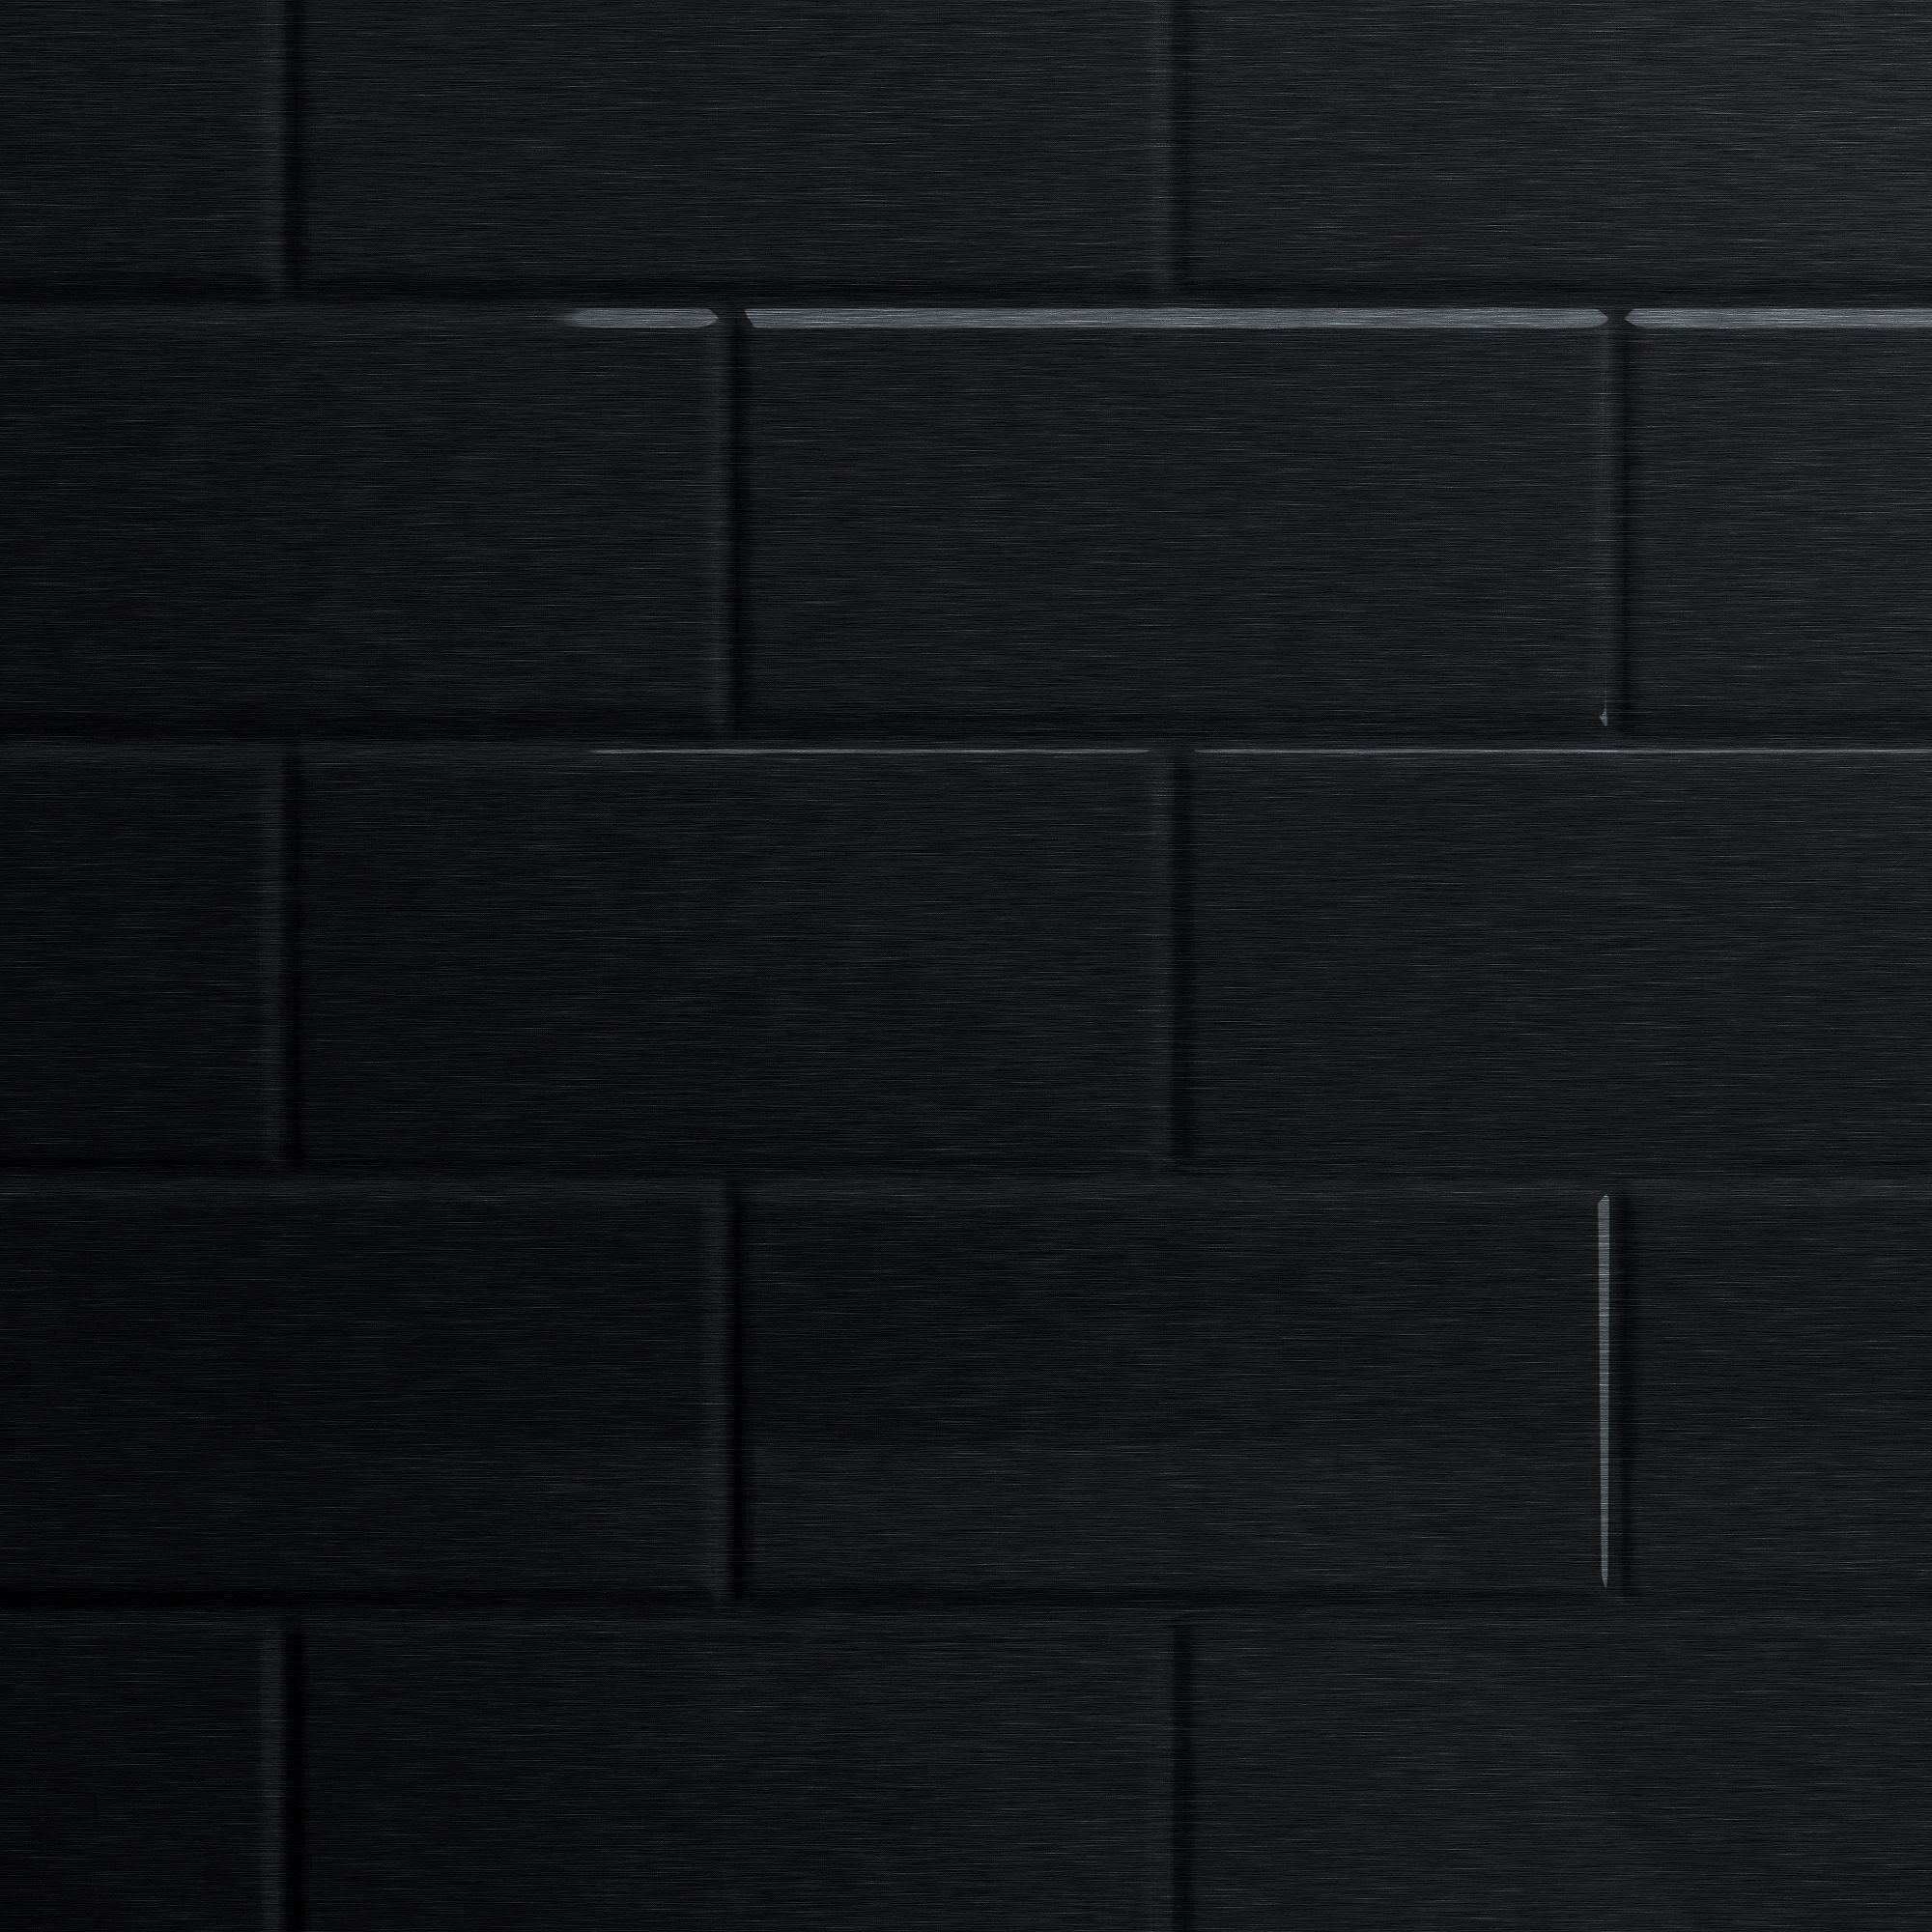 Splashwall Gloss Black Tile effect 2 sided Shower Panel kit (L)2420mm (W)1200mm (T)3mm